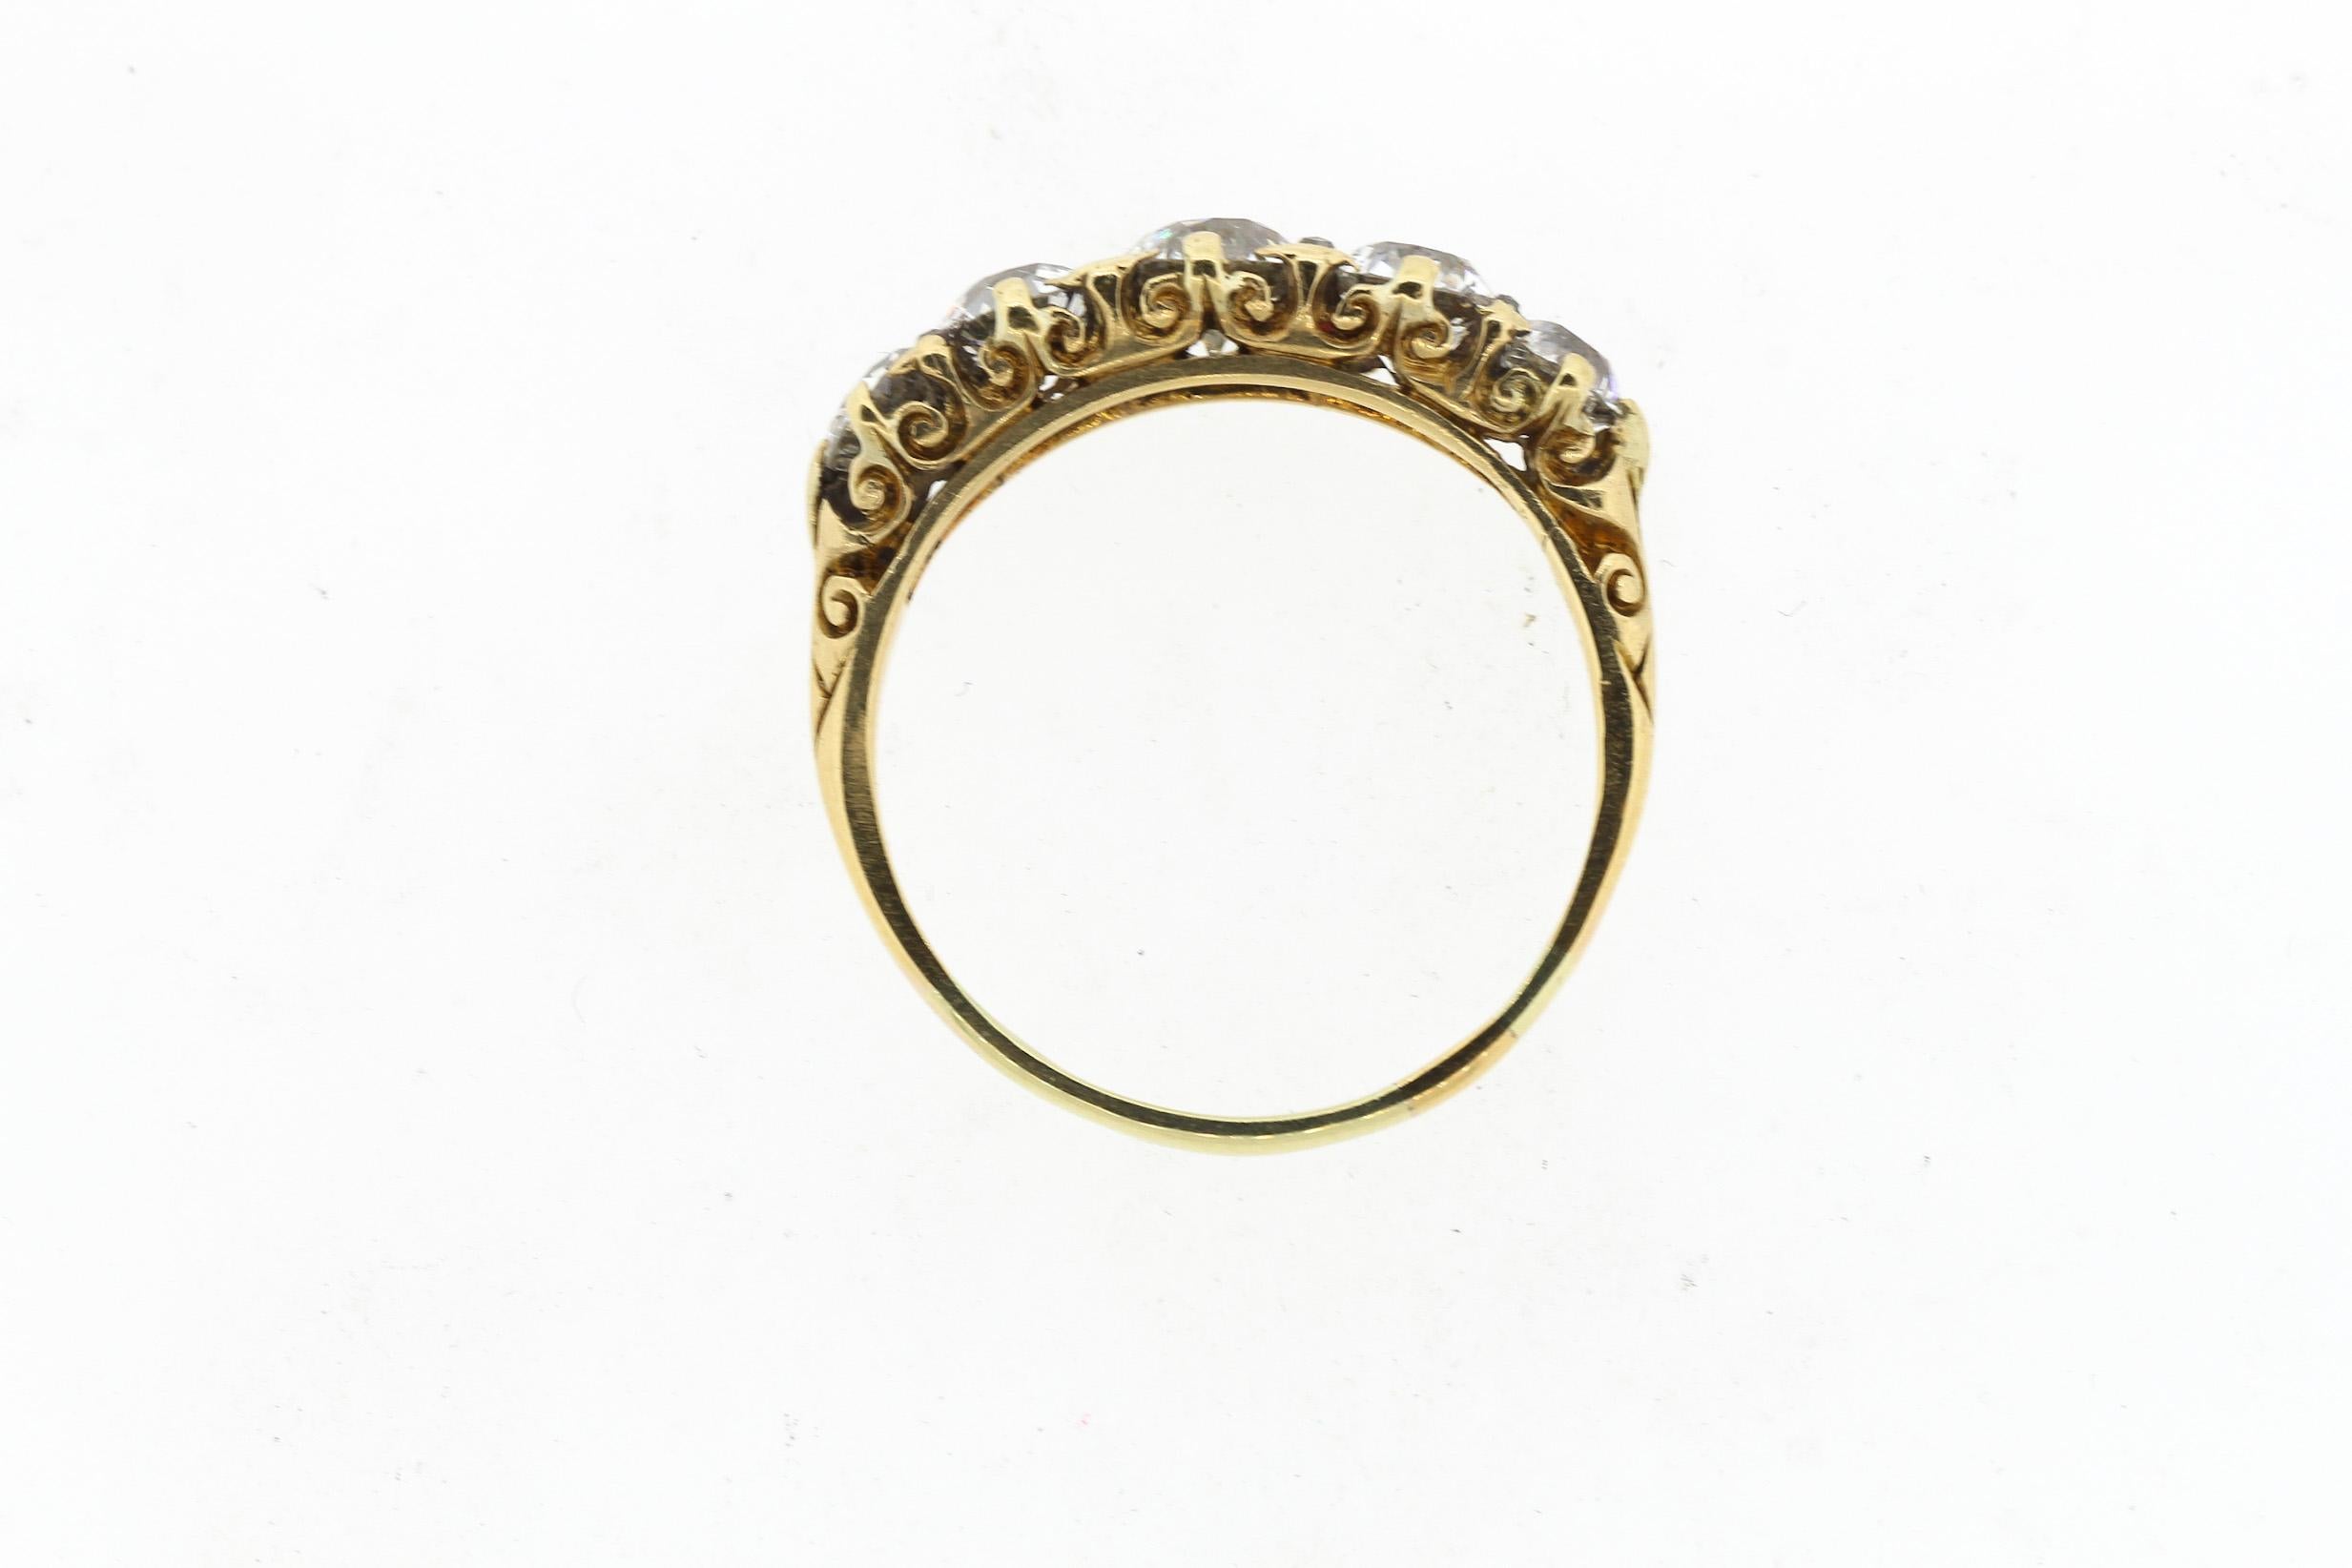 18 carat gold 5 stone diamond ring